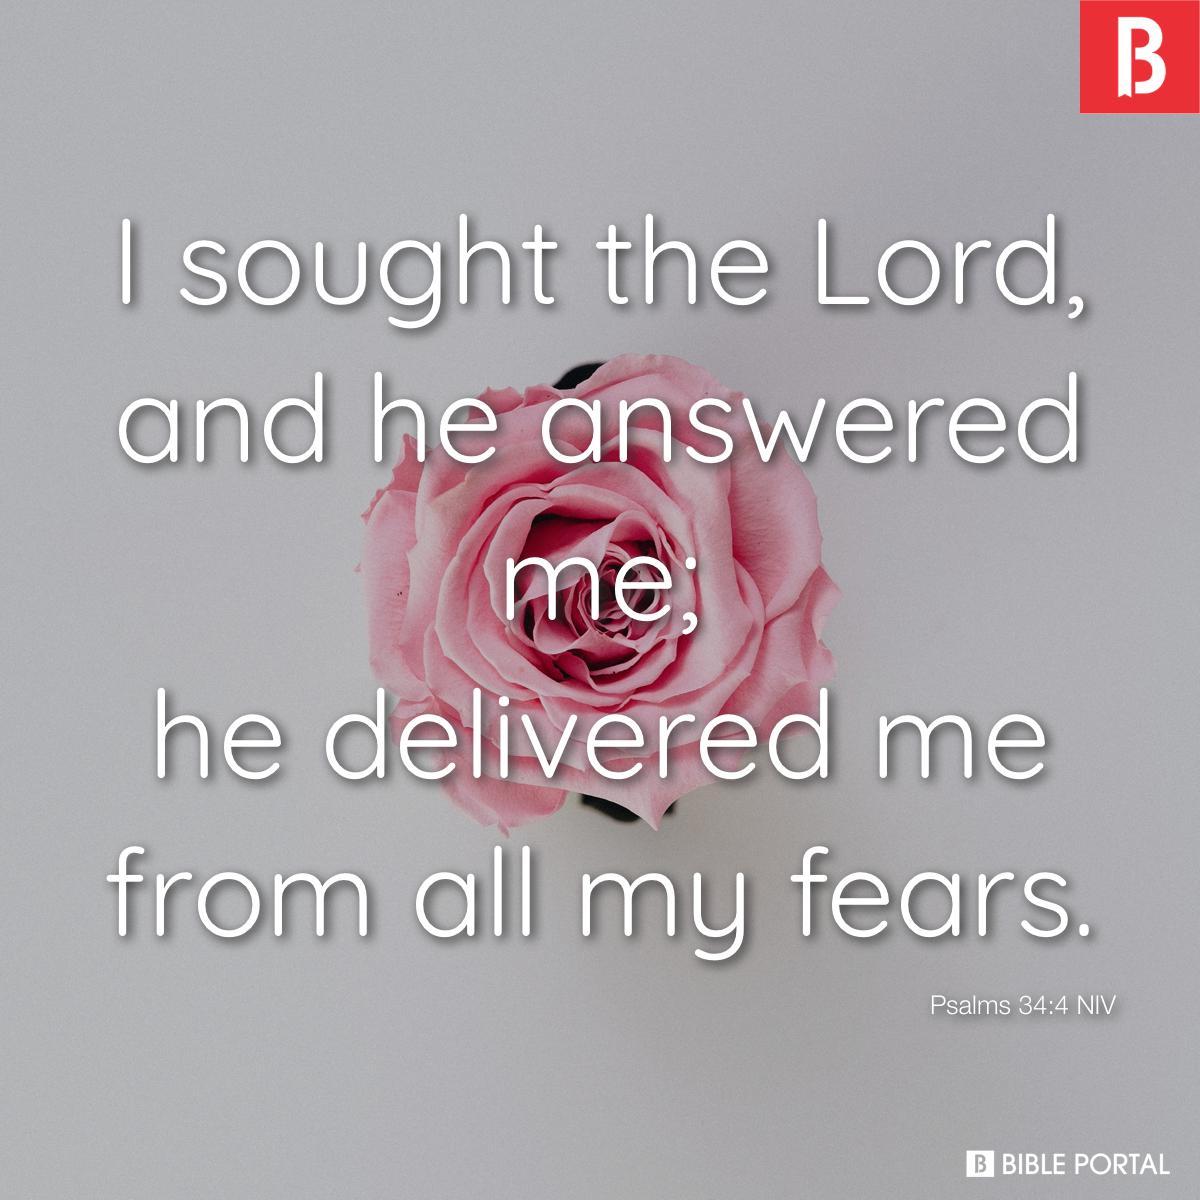 Psalms 34:4 NIV